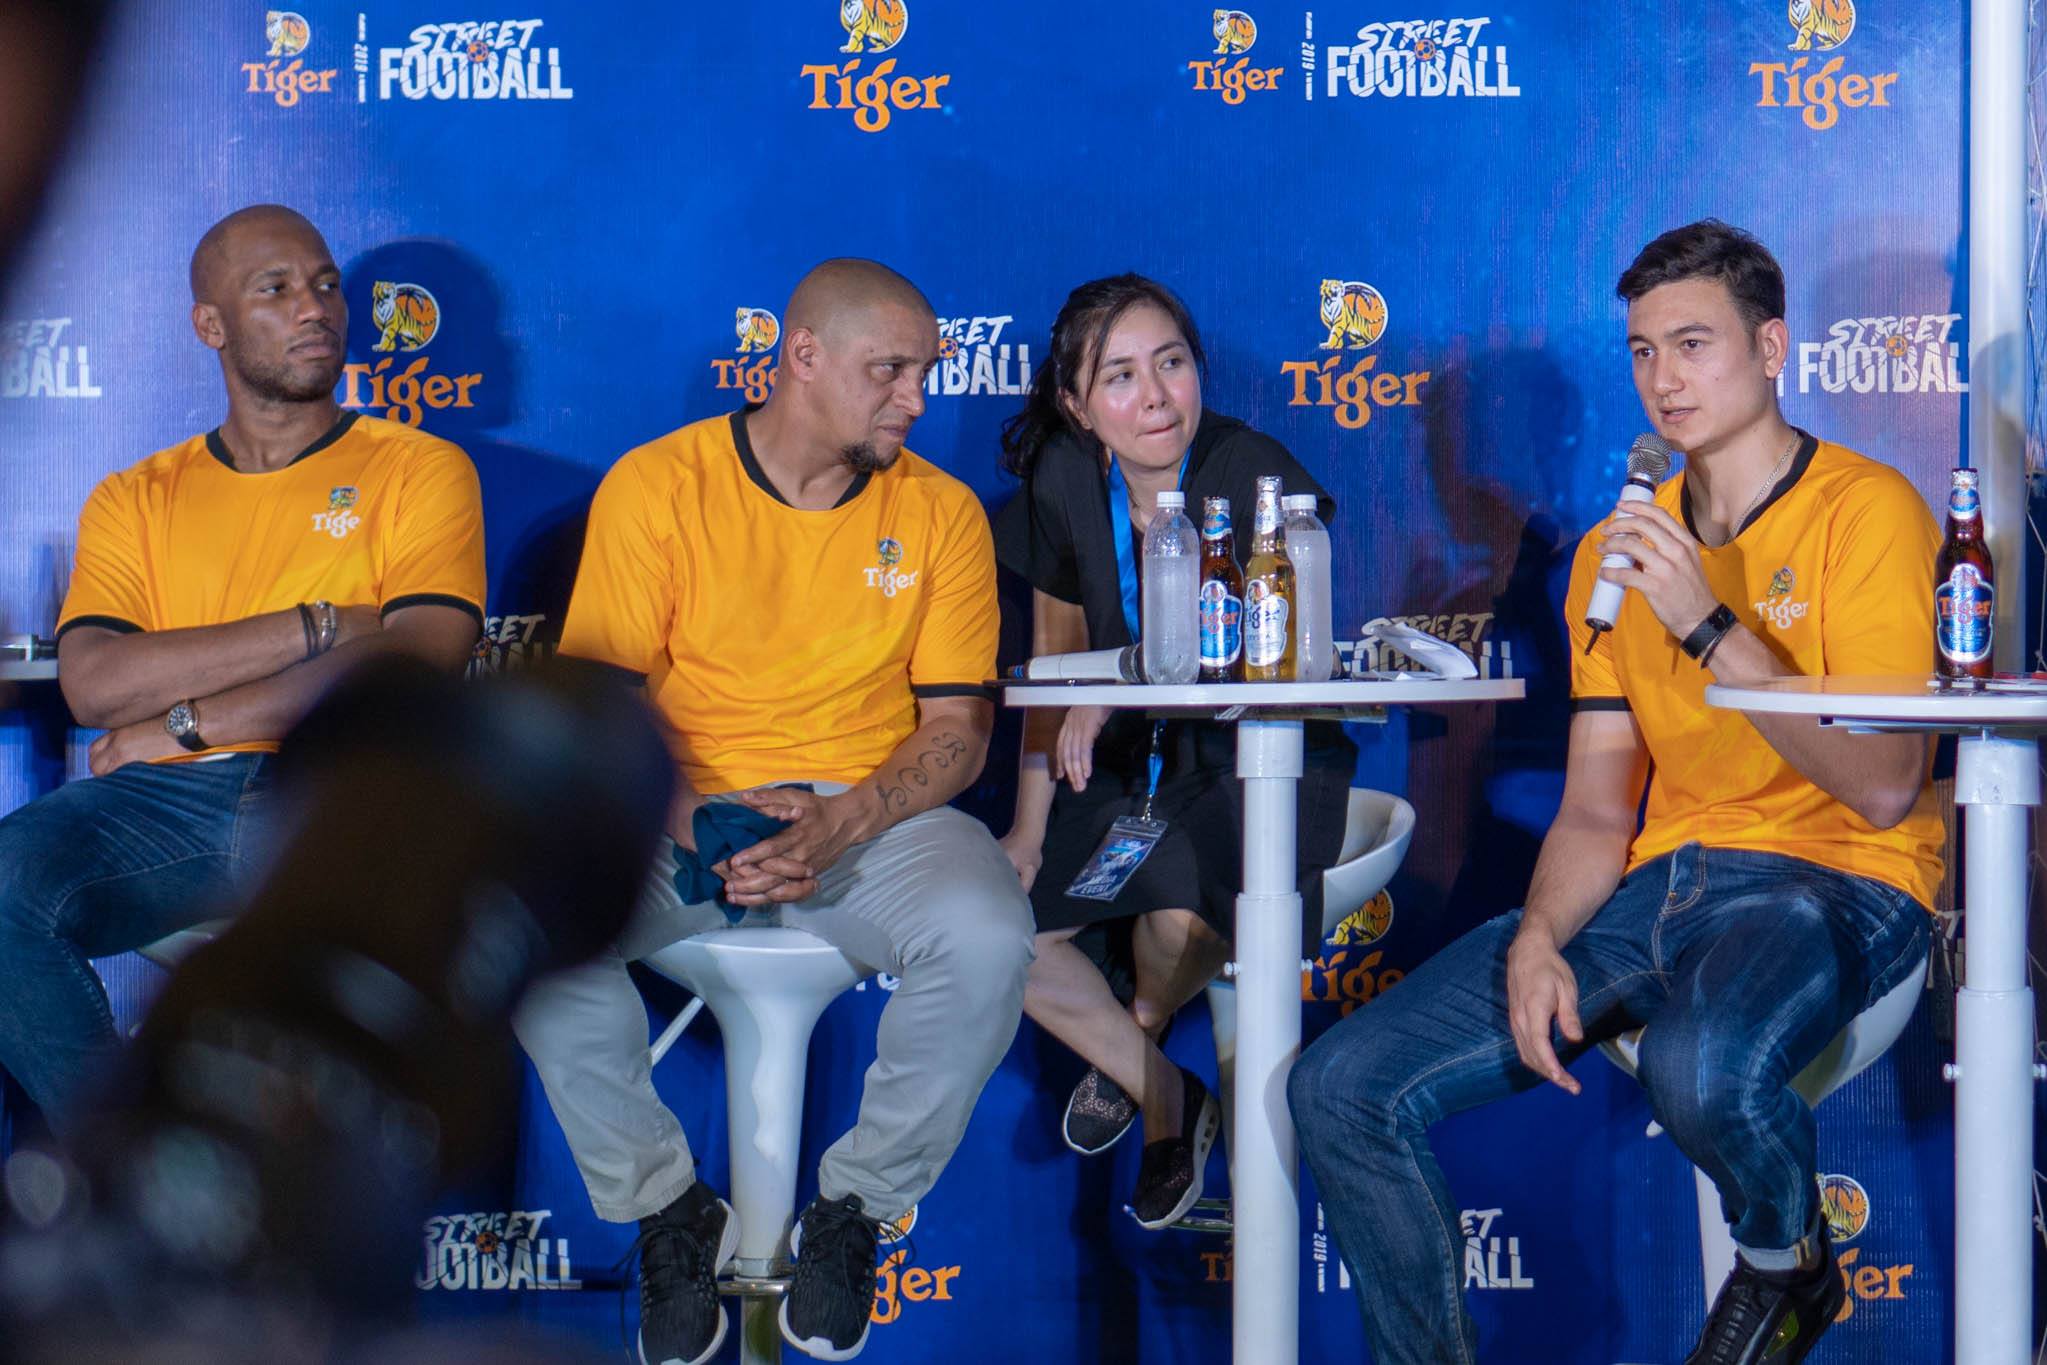 Tiger Street Football: Gặp gỡ và giao lưu 5 siêu sao Bóng đá cùng thủ môn Đặng Văn Lâm